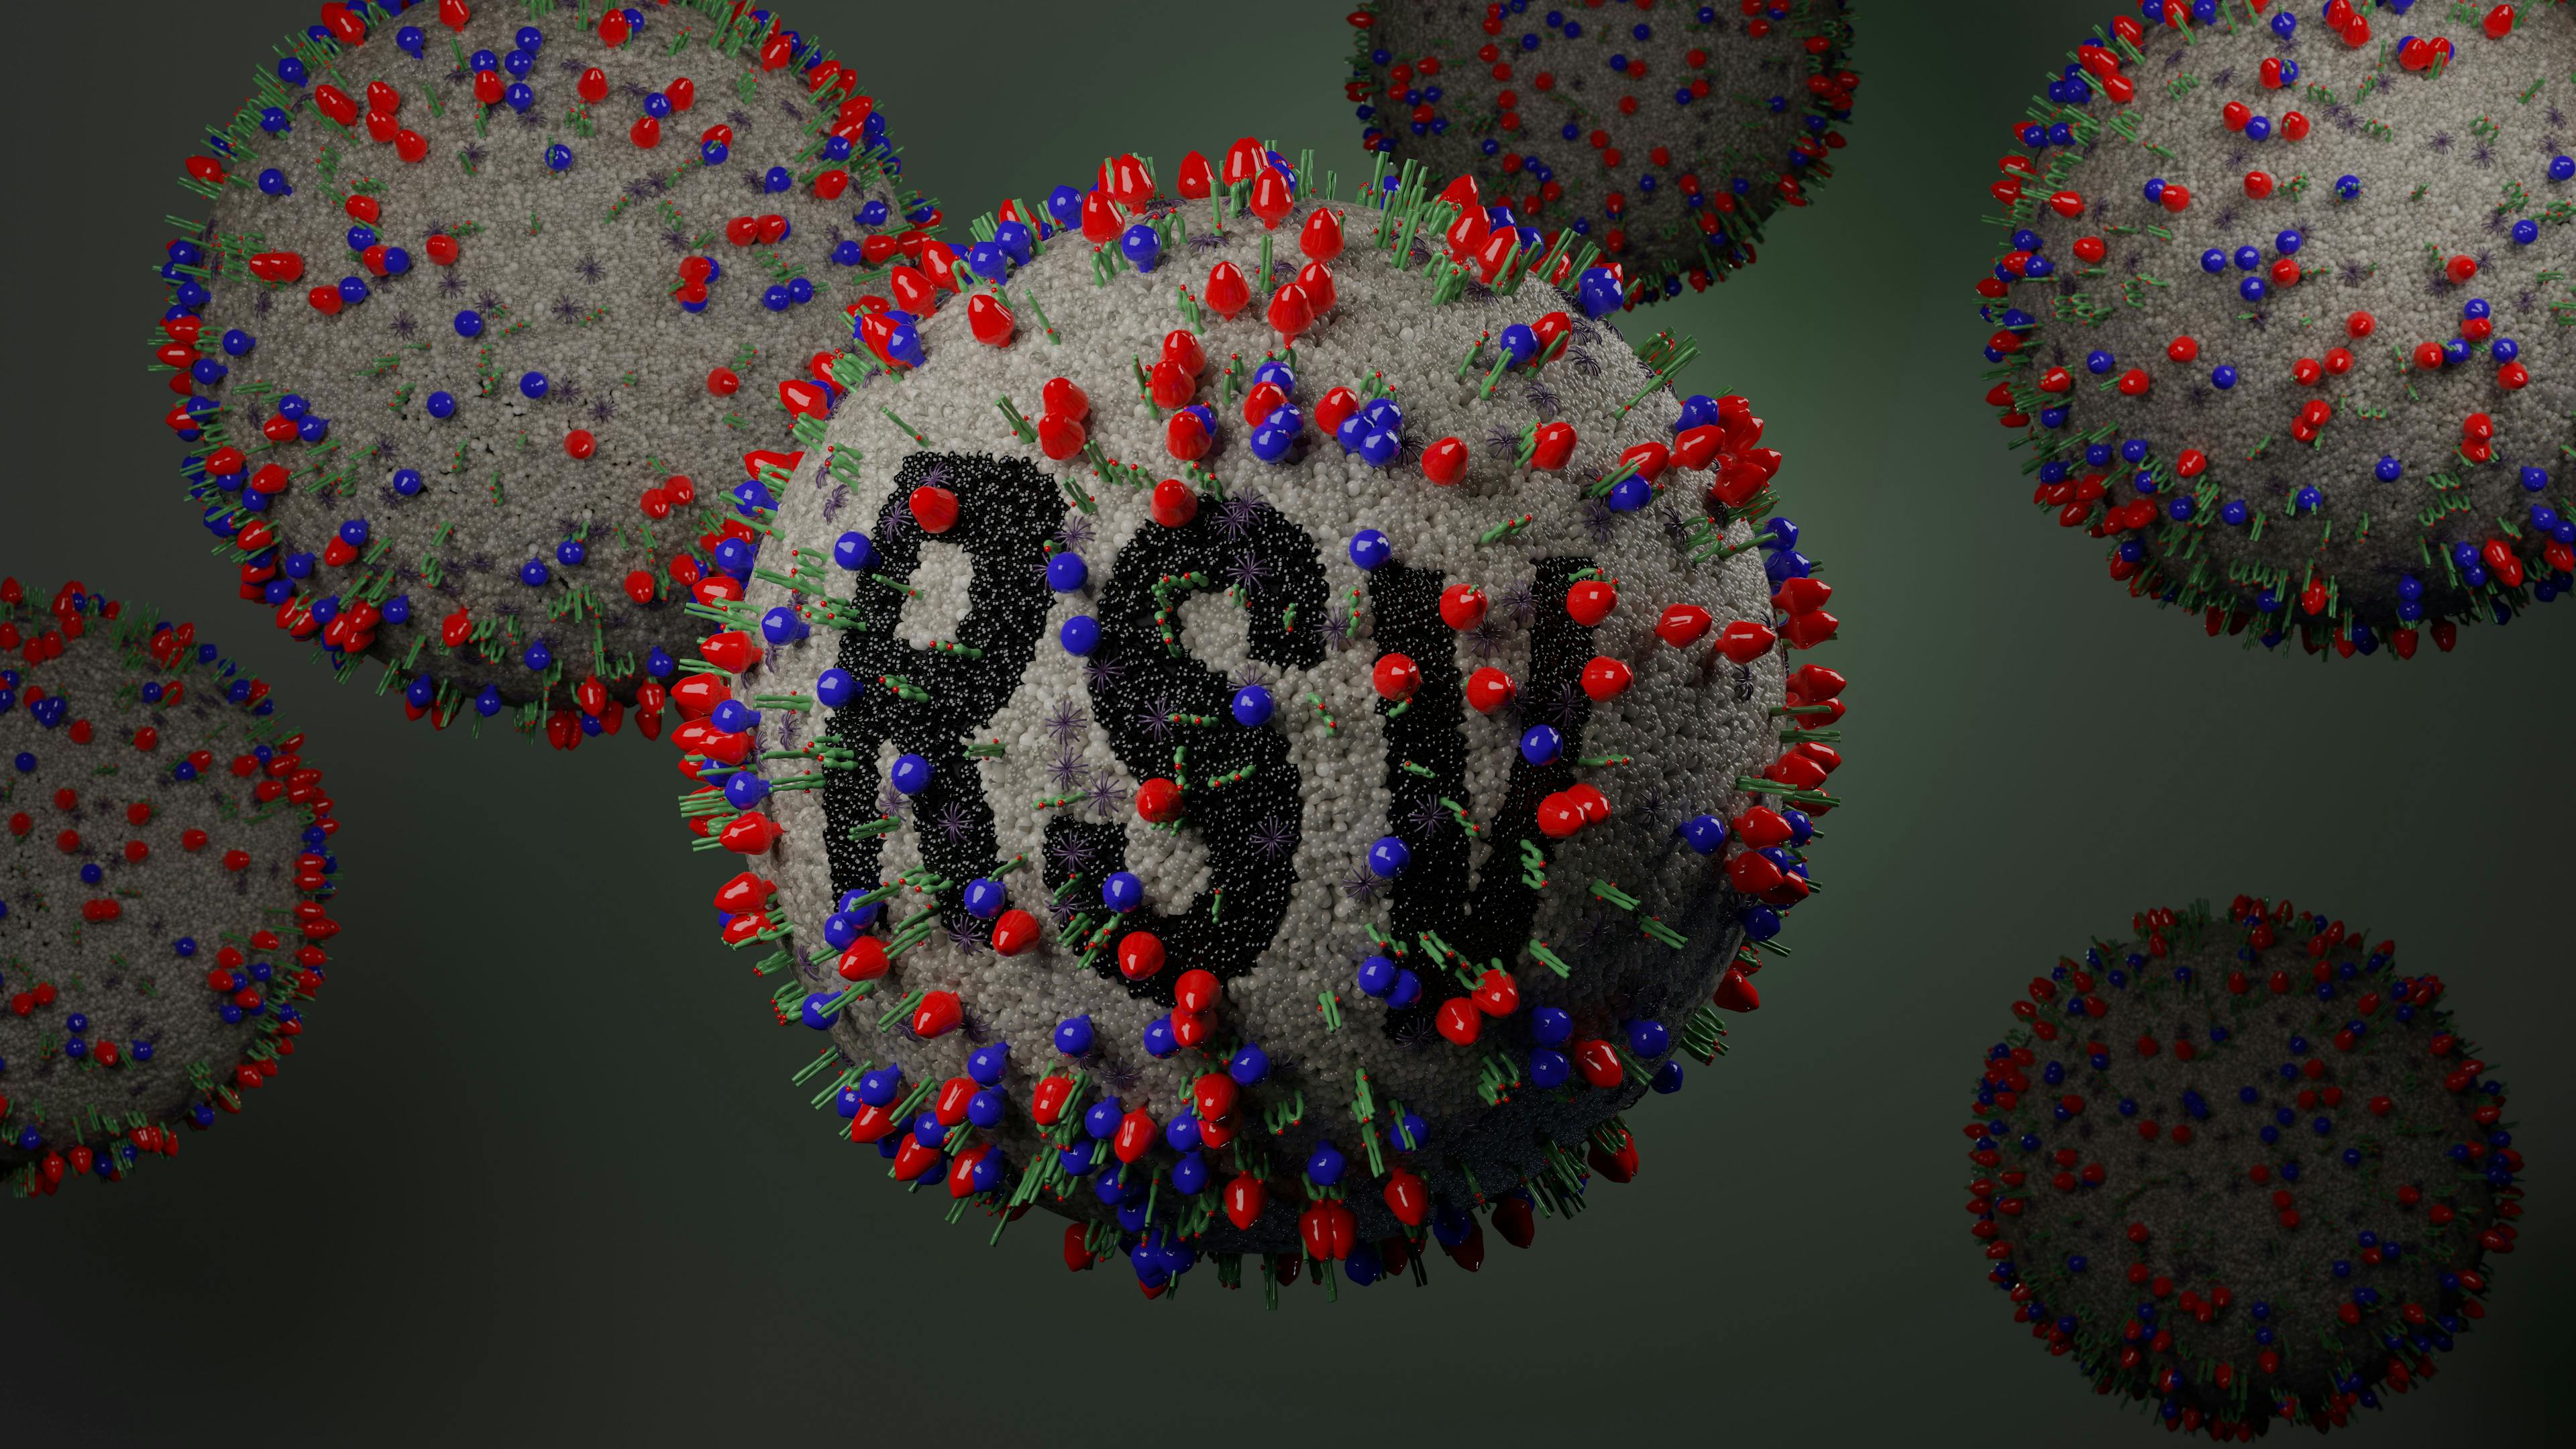 Illustration of Respiratory Syncytial Virus or RSV - Image credit: Peter Hansen | stock.adobe.com